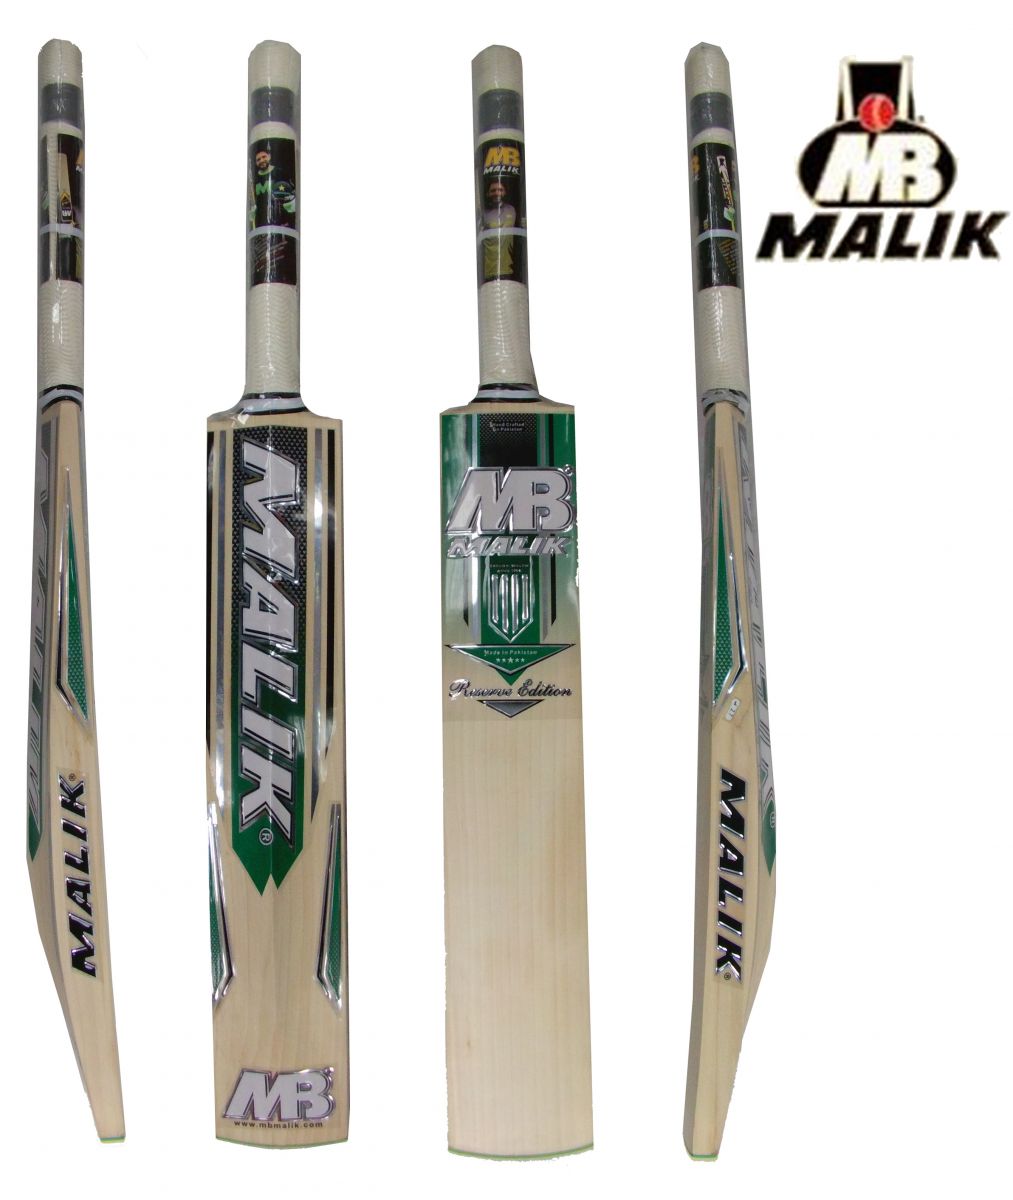 MB Malik Reserve Grade1+English willow Cricket Bat SH 2.7 Lb Free Bag